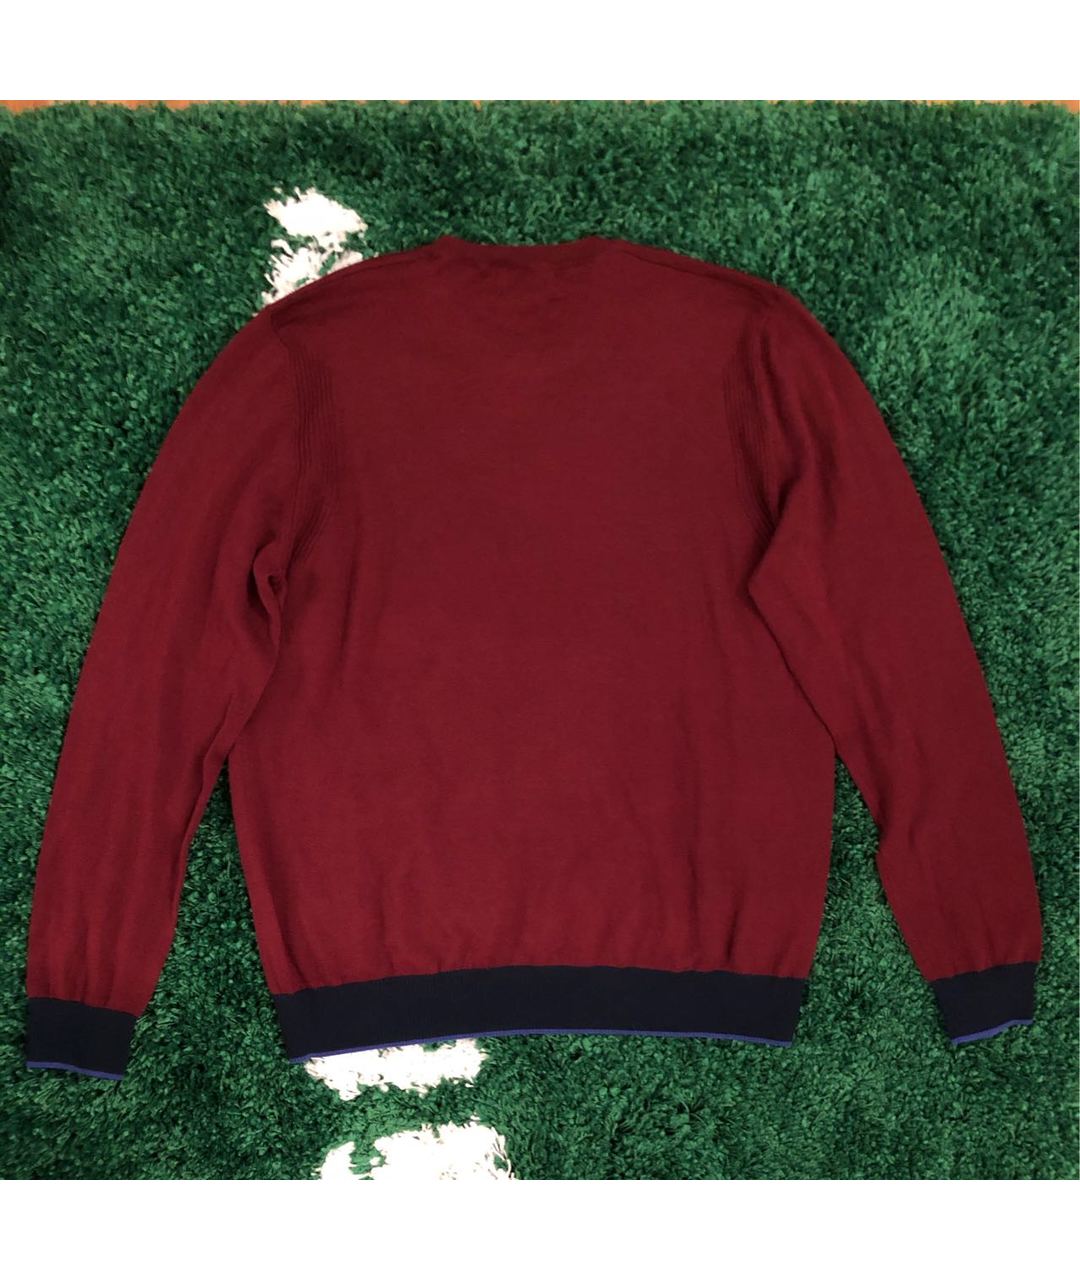 ICE PLAY Бордовый шерстяной джемпер / свитер, фото 2